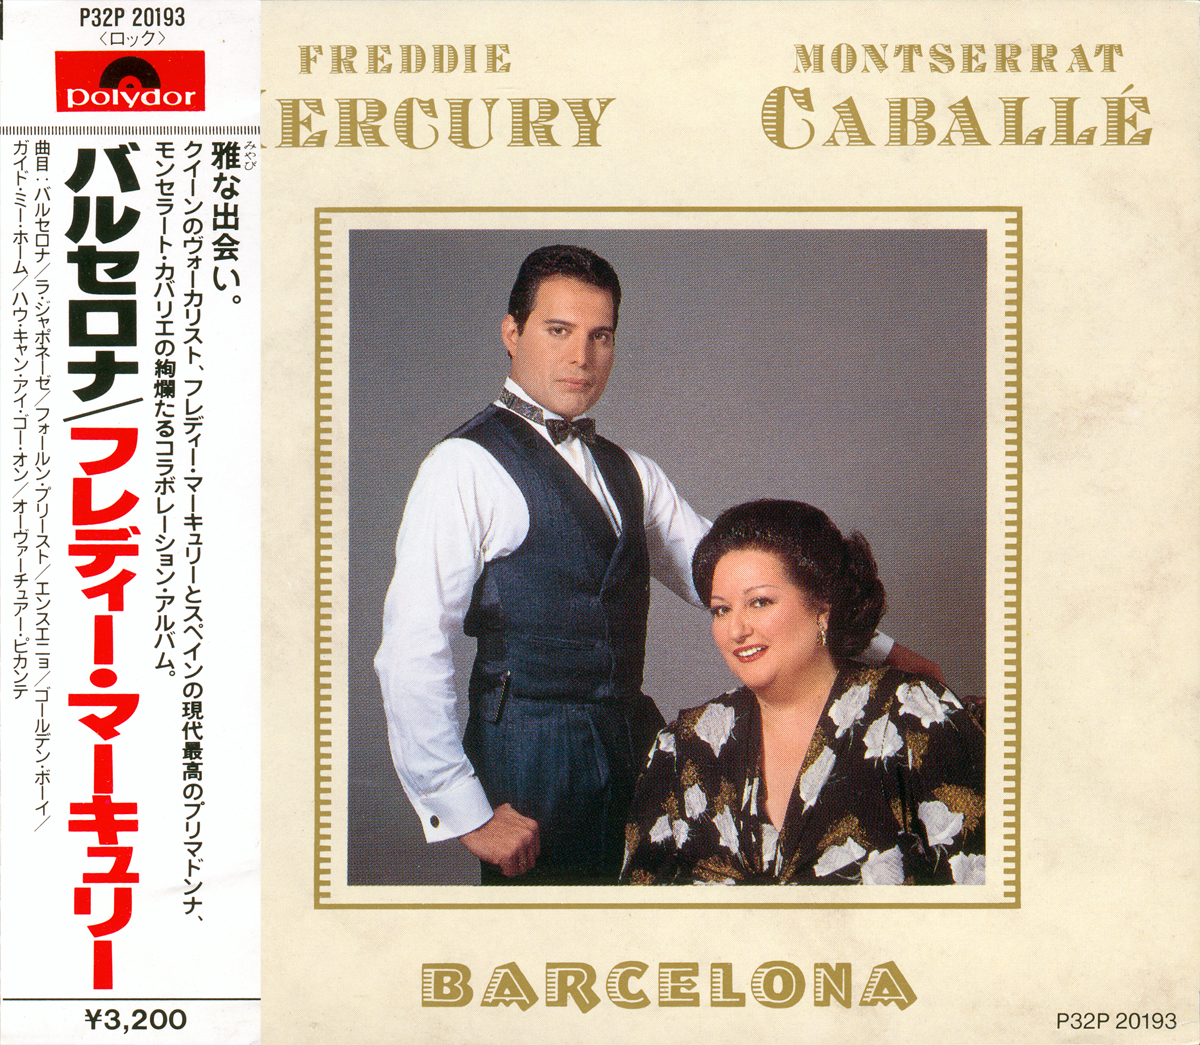 Freddie Mercury  Montserrat Caballe - Barcelona 1988 - folder.jpg